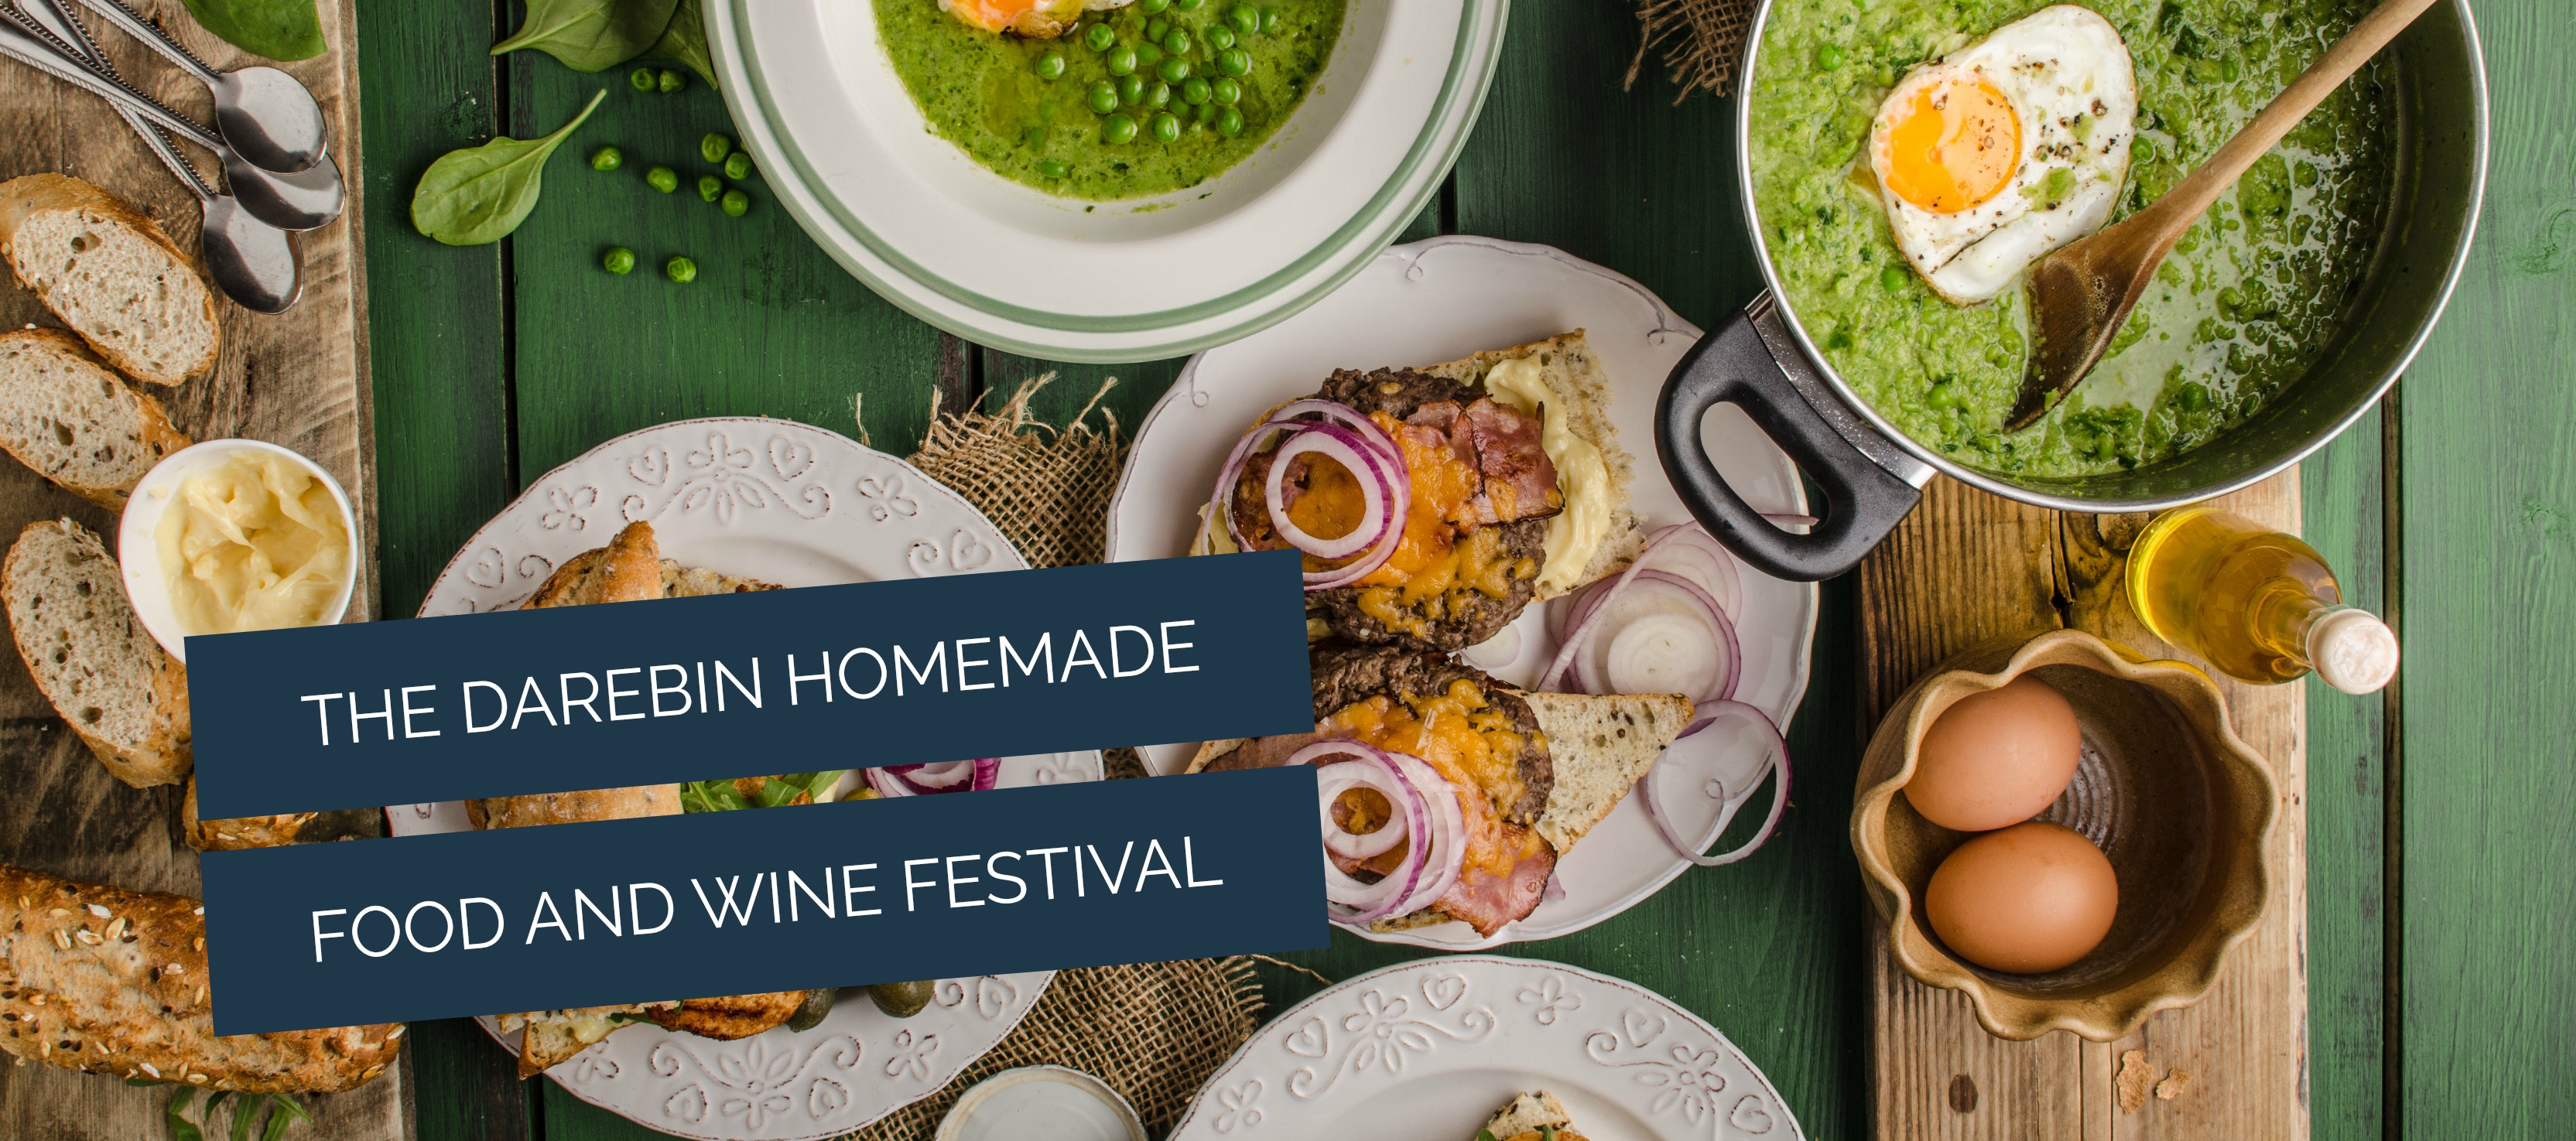 Love&Co on the Darebin Homemade Food and Wine Festival